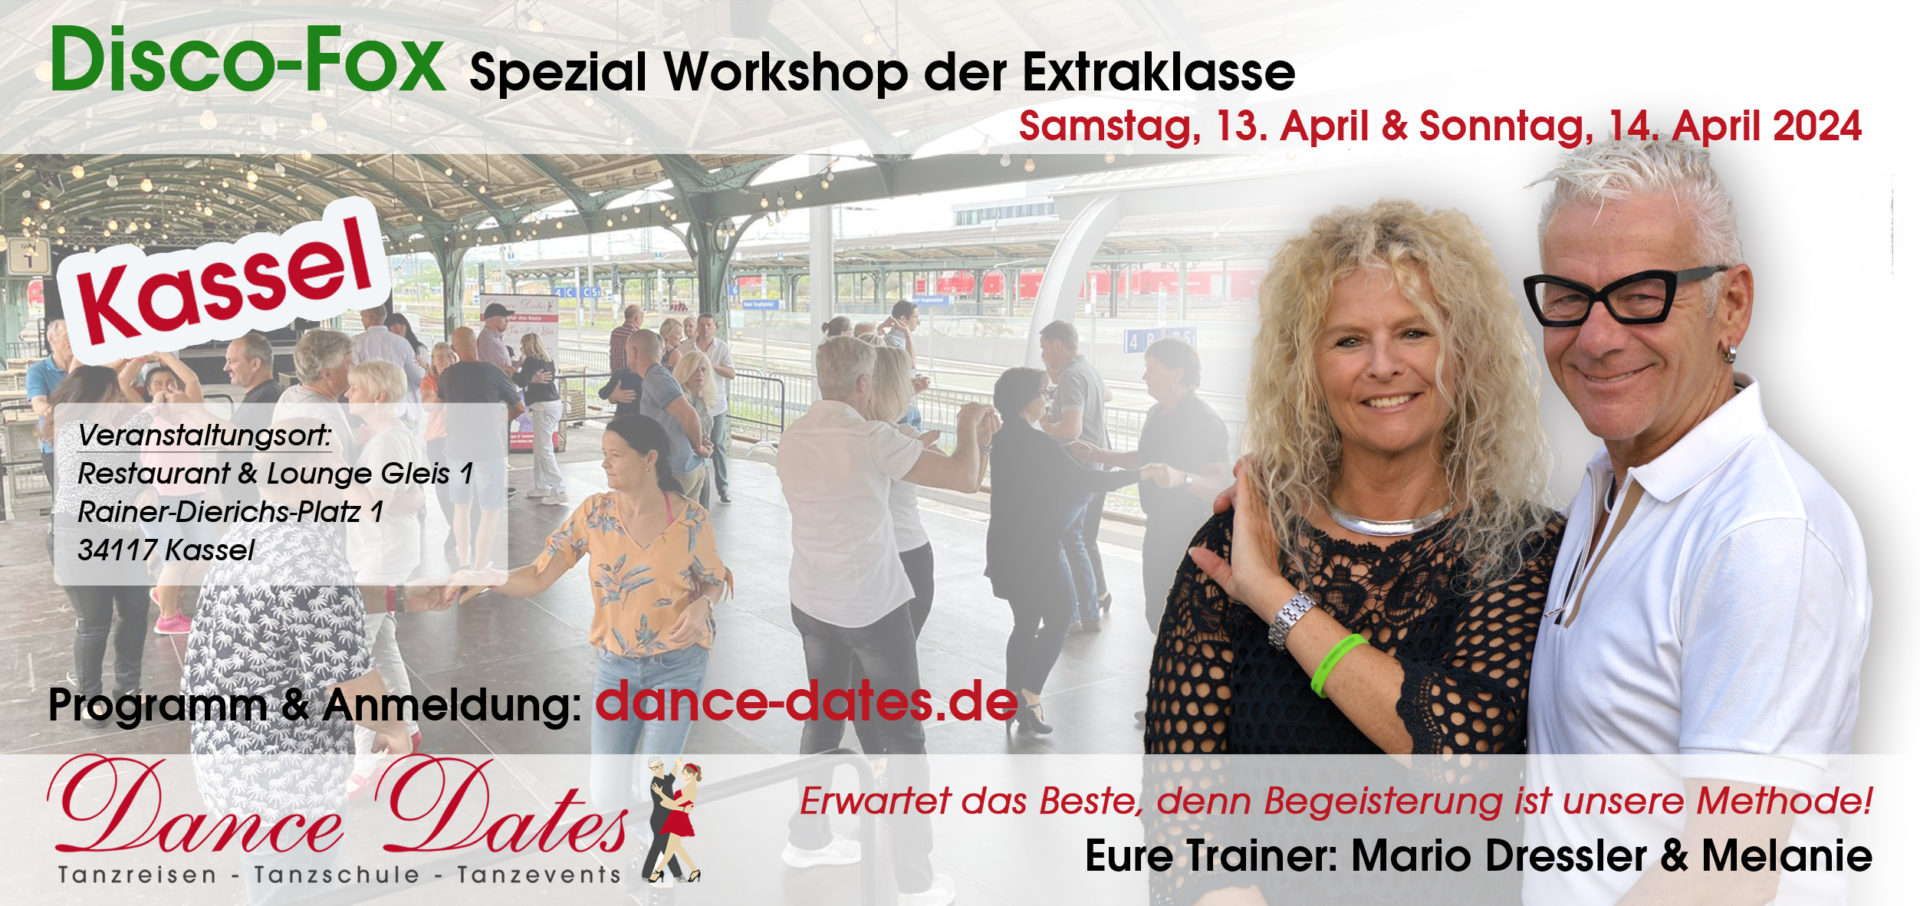 Disco-Fox Workshops der Extraklasse in Kassel